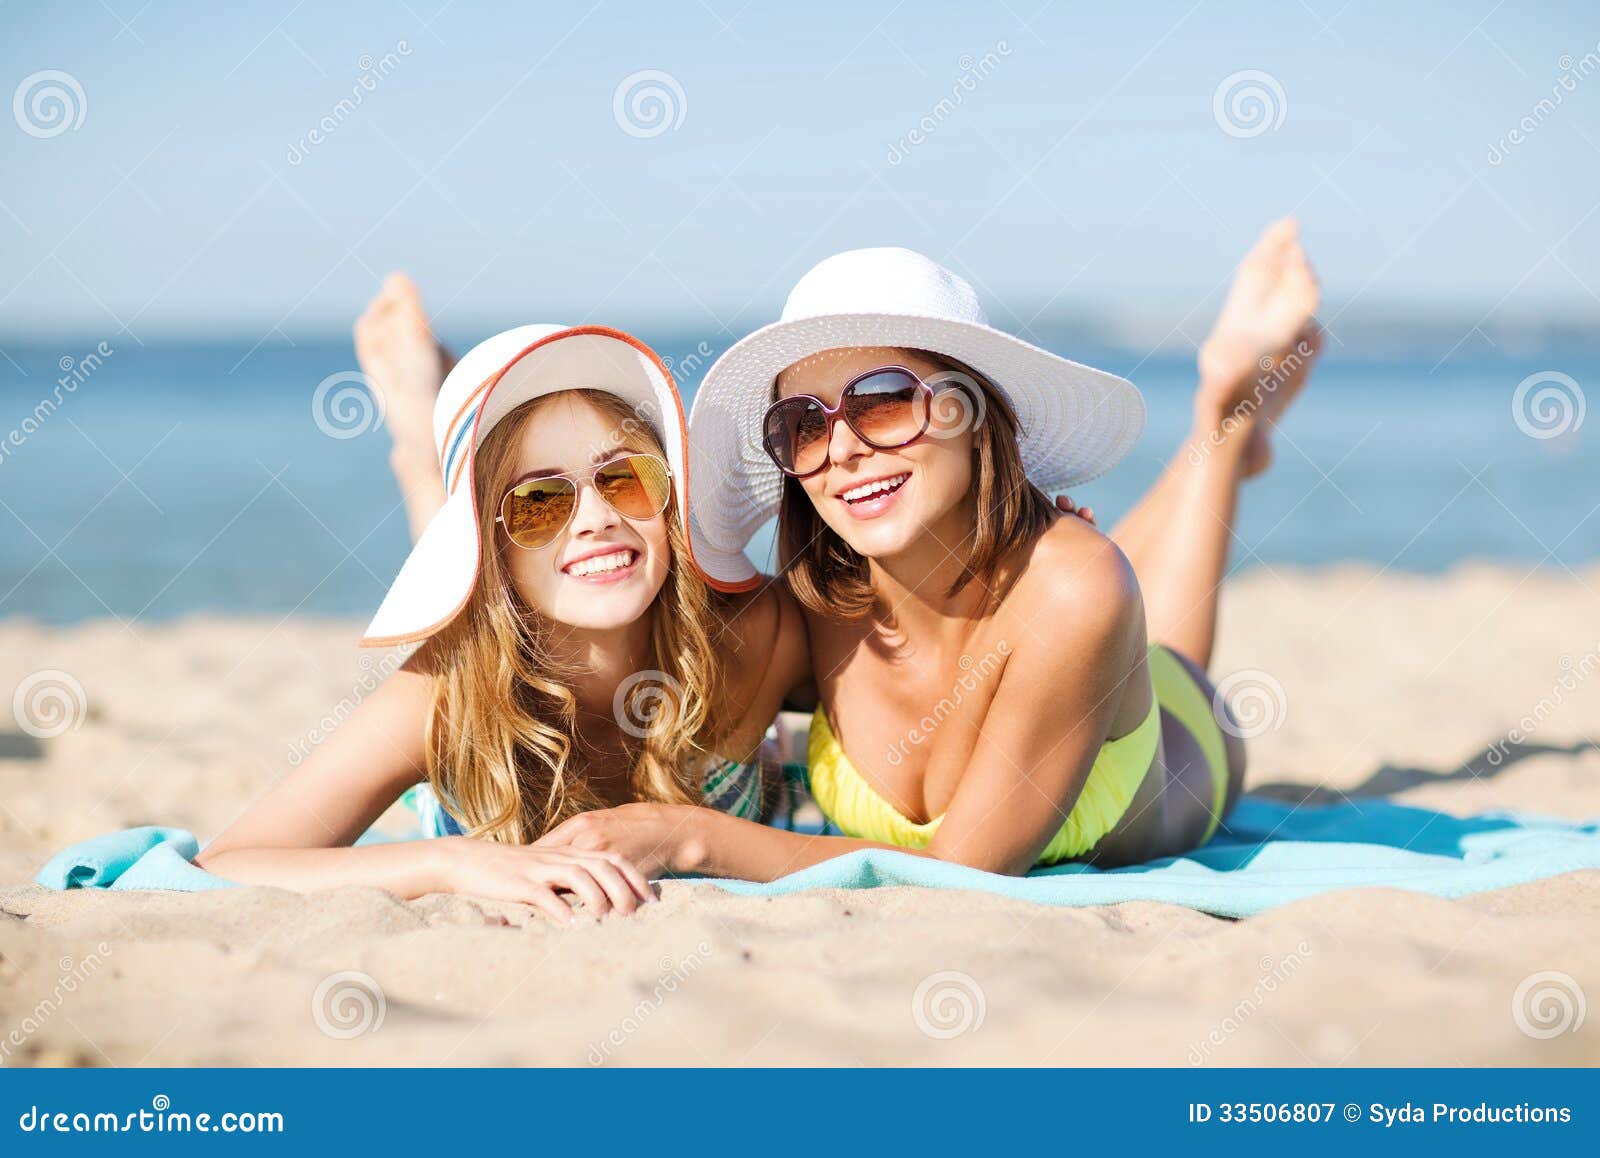 Girls Sunbathing On The Beach Stock Image Image 33506807